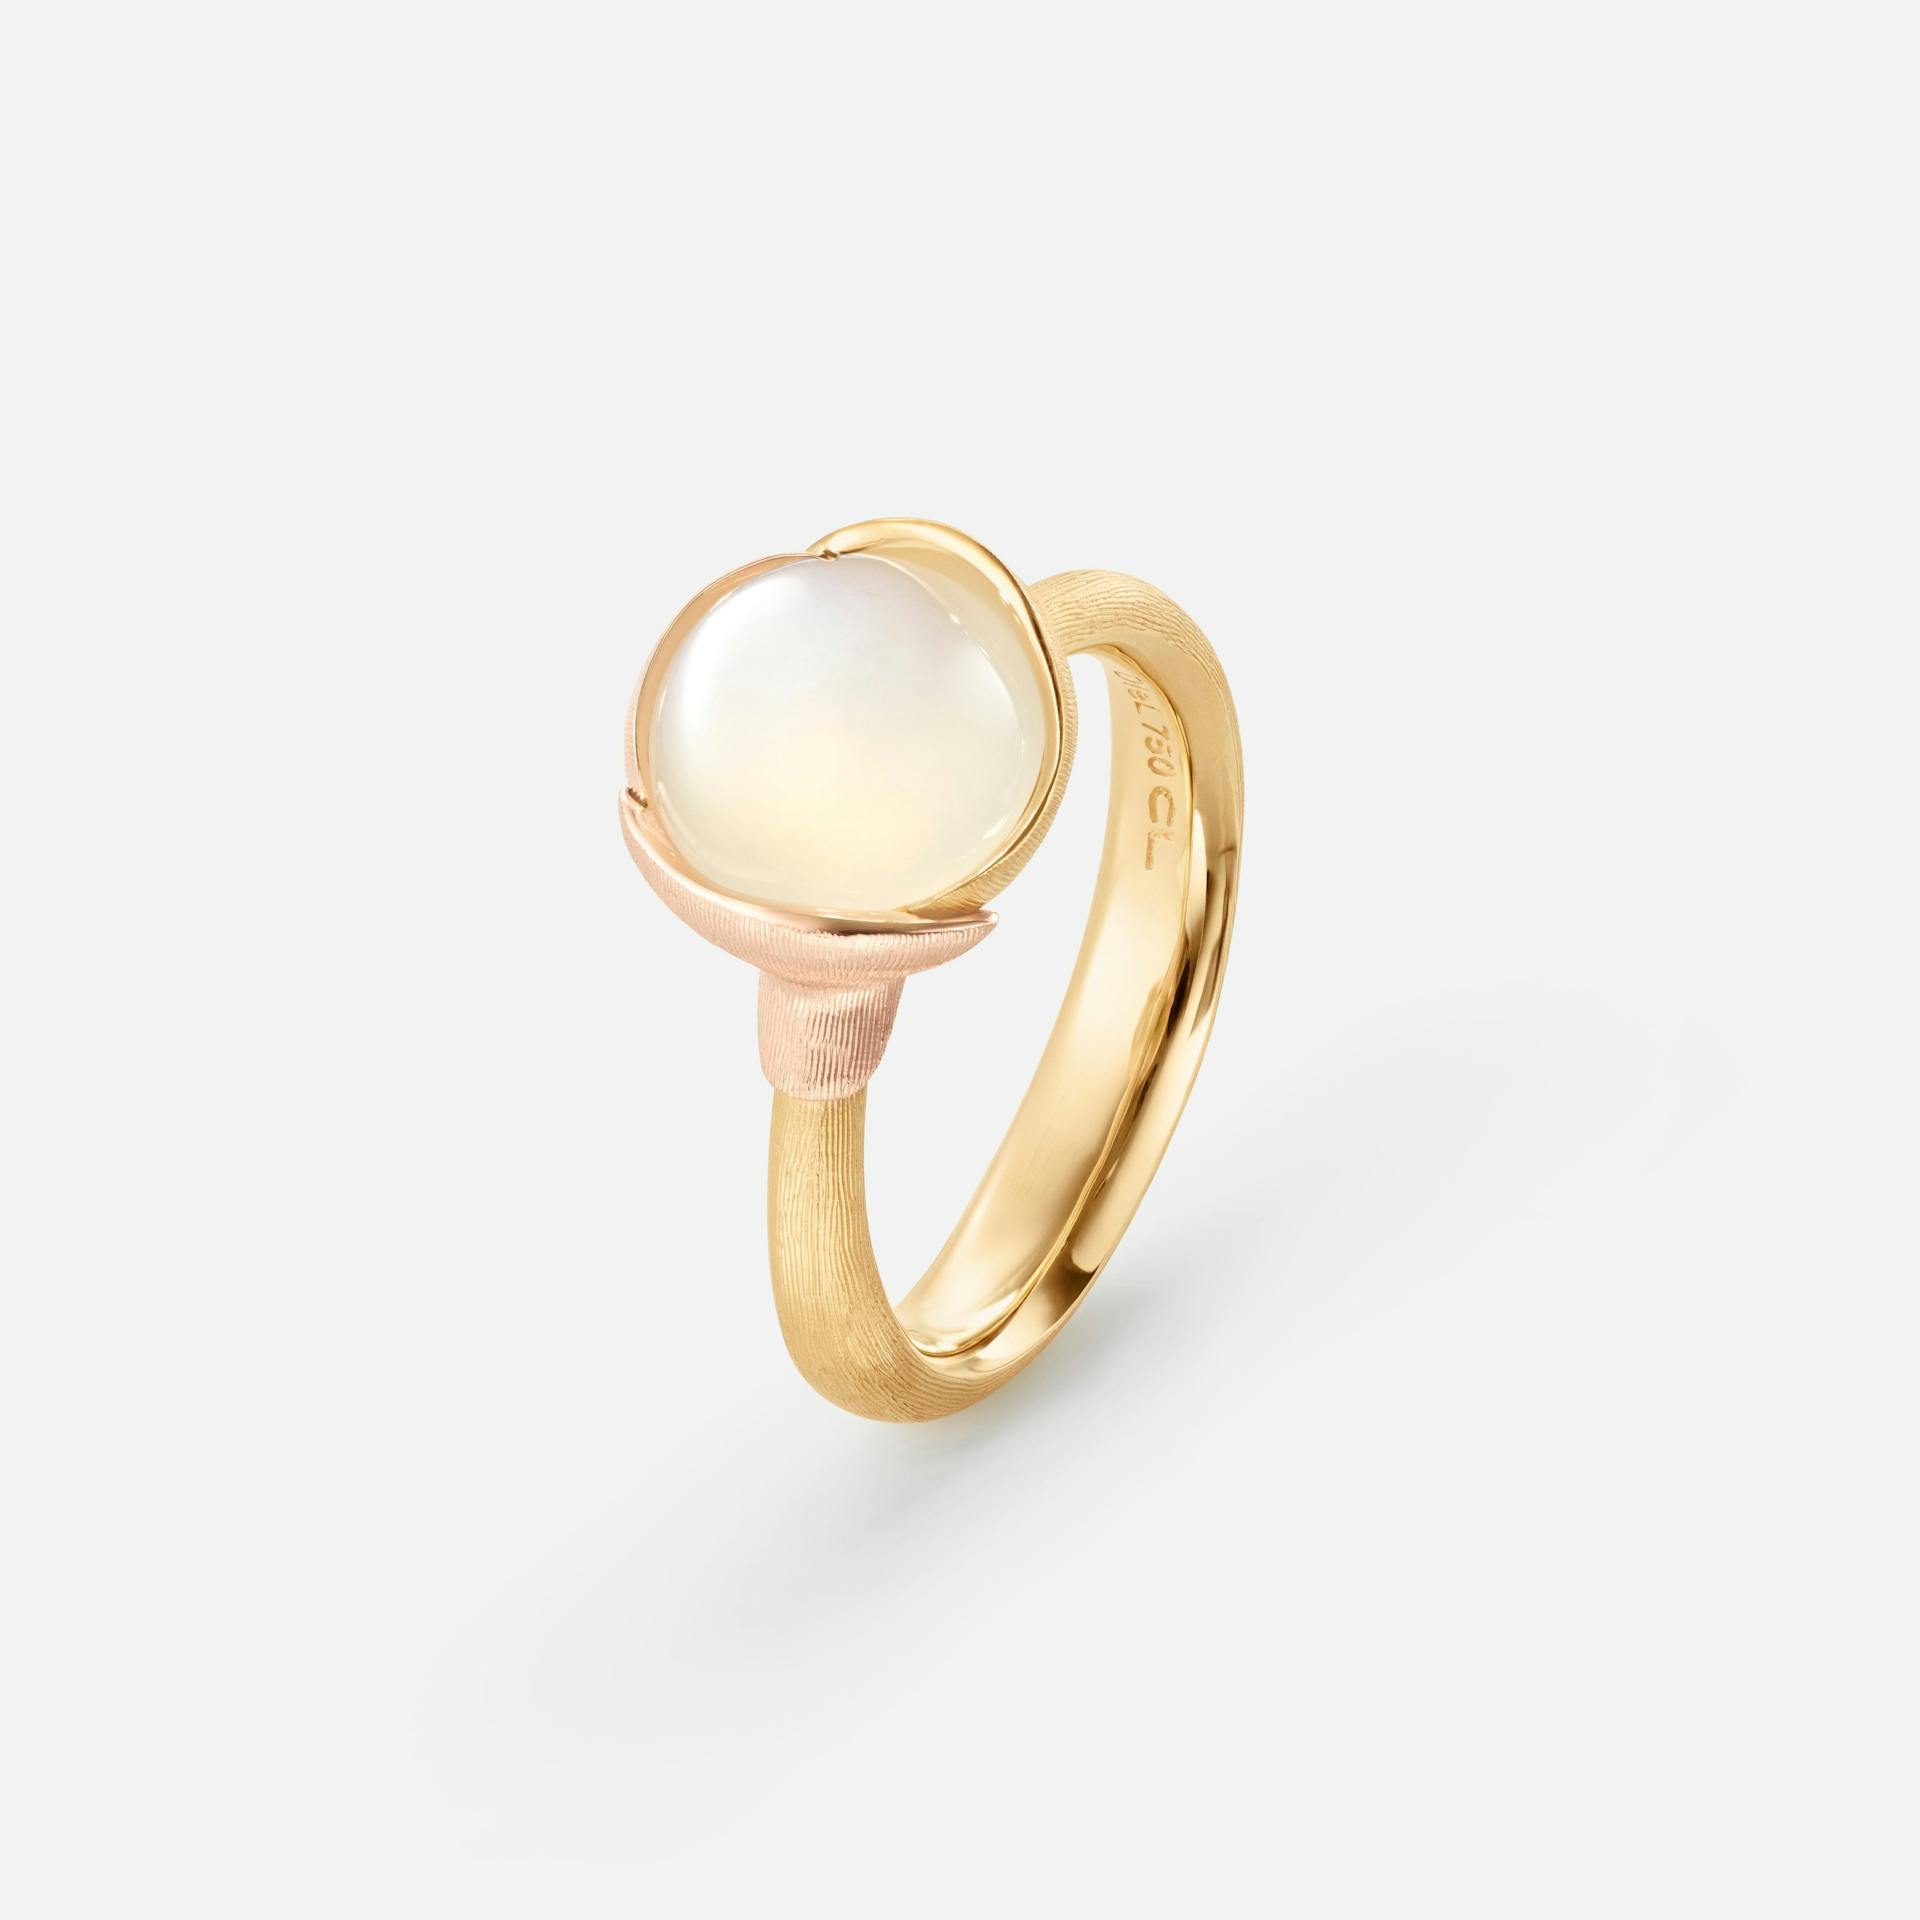 Lotus-ring størrelse 1 i gult guld og rosaguld med hvid månesten | Ole Lynggaard Copenhagen